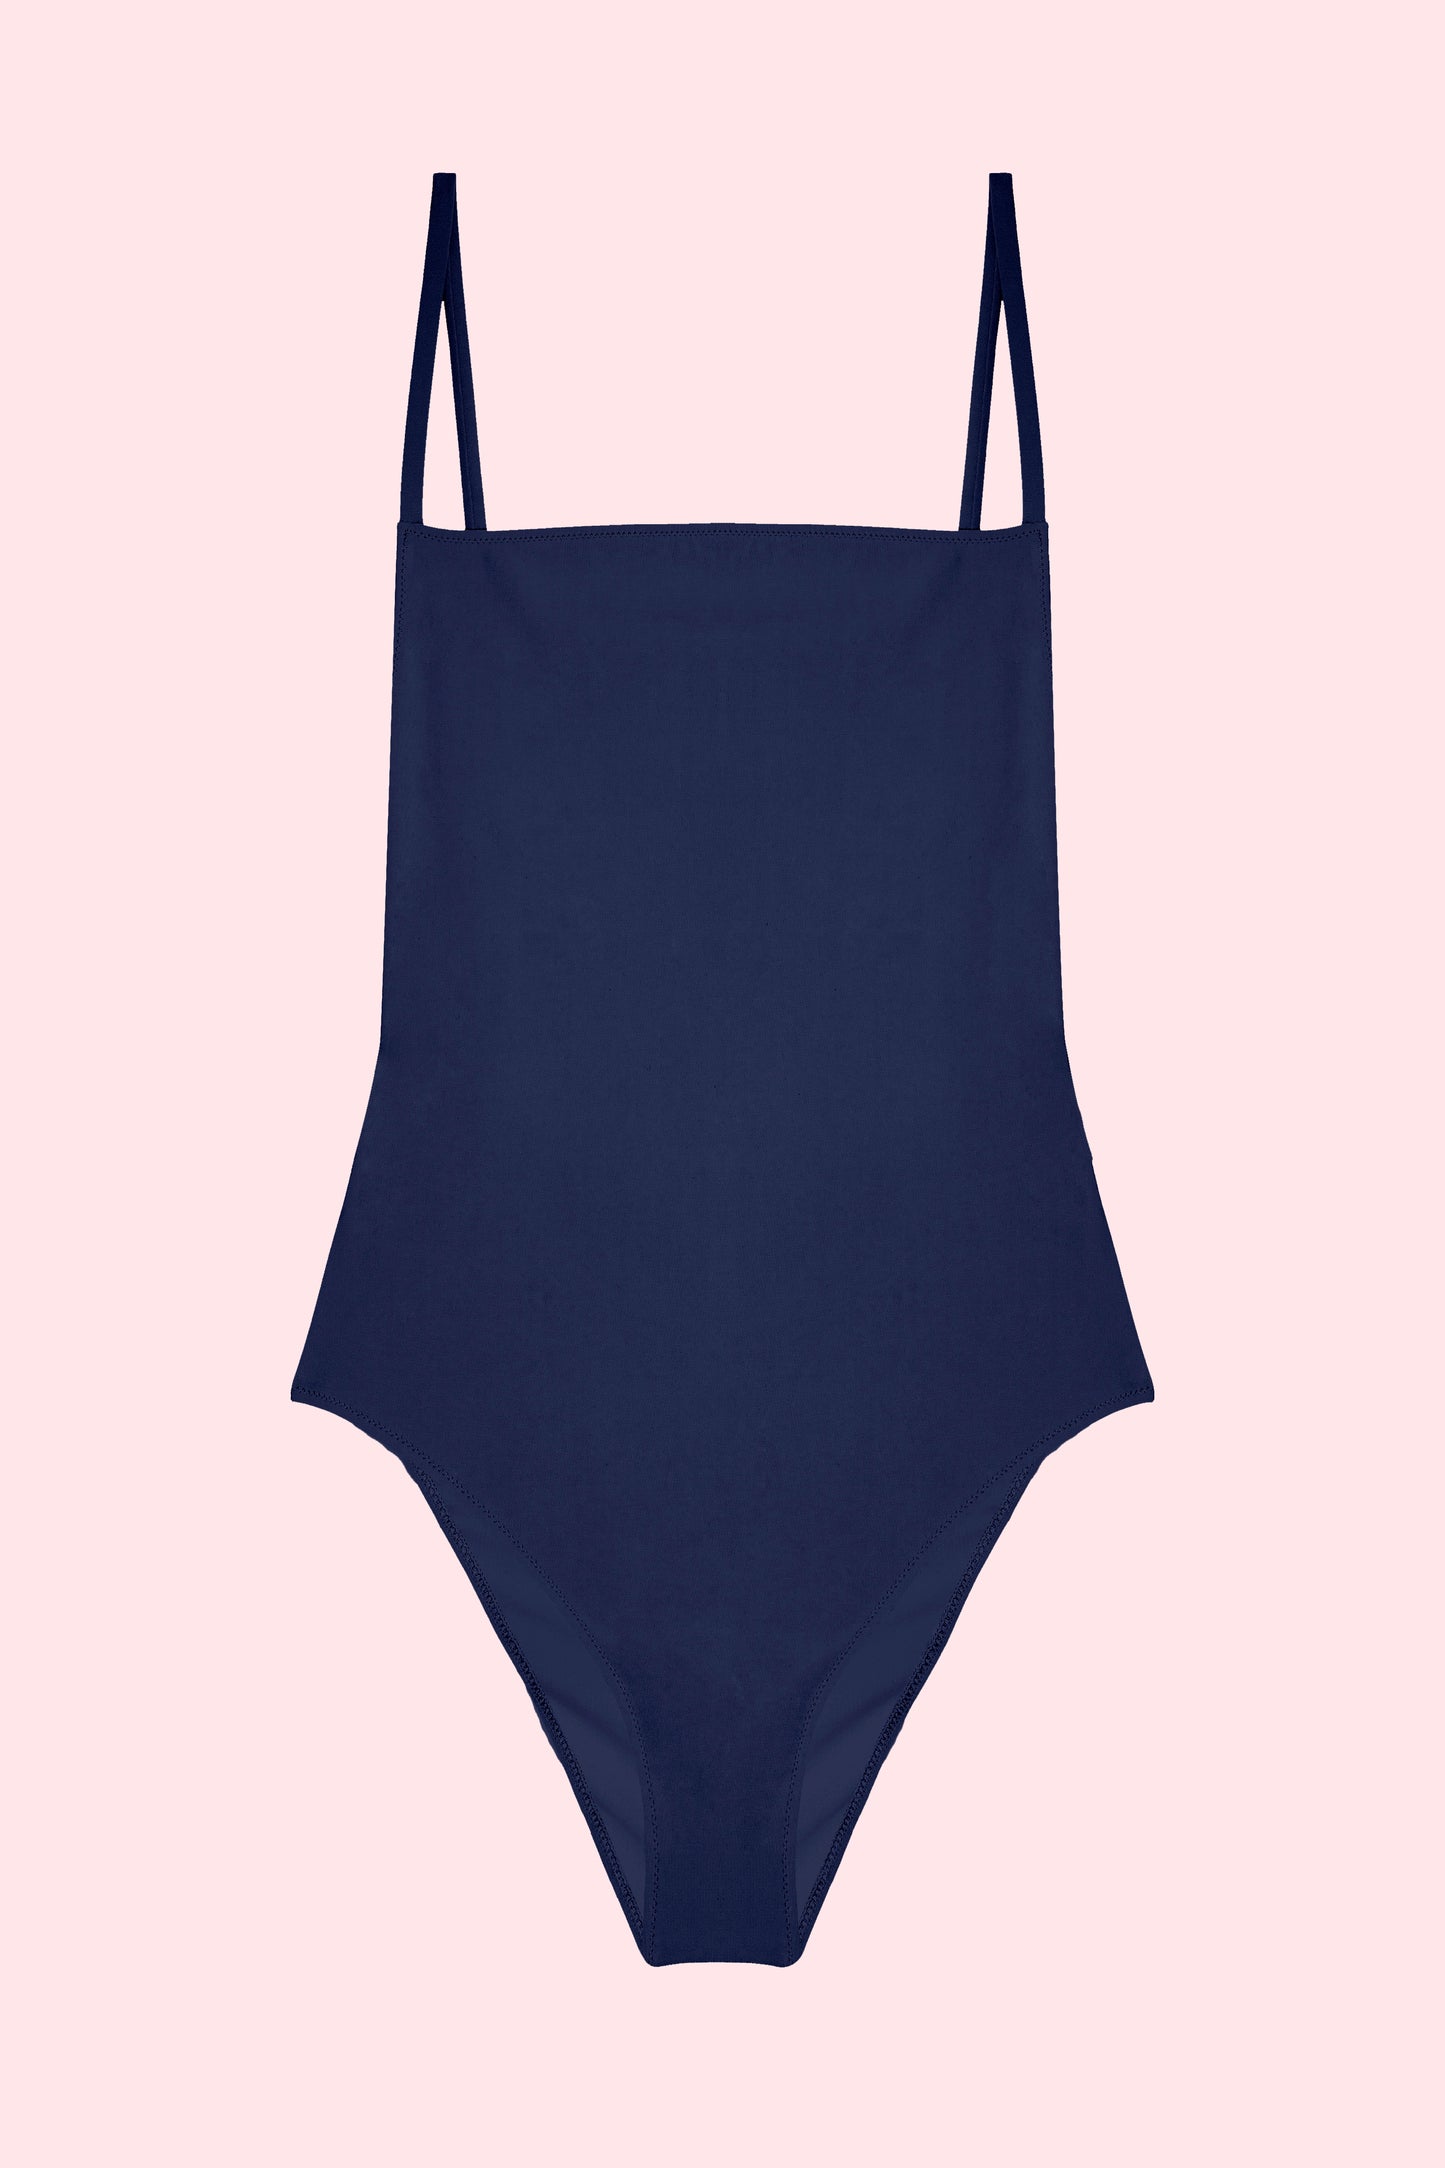 Lido swimsuit Tre navy blue product shot 